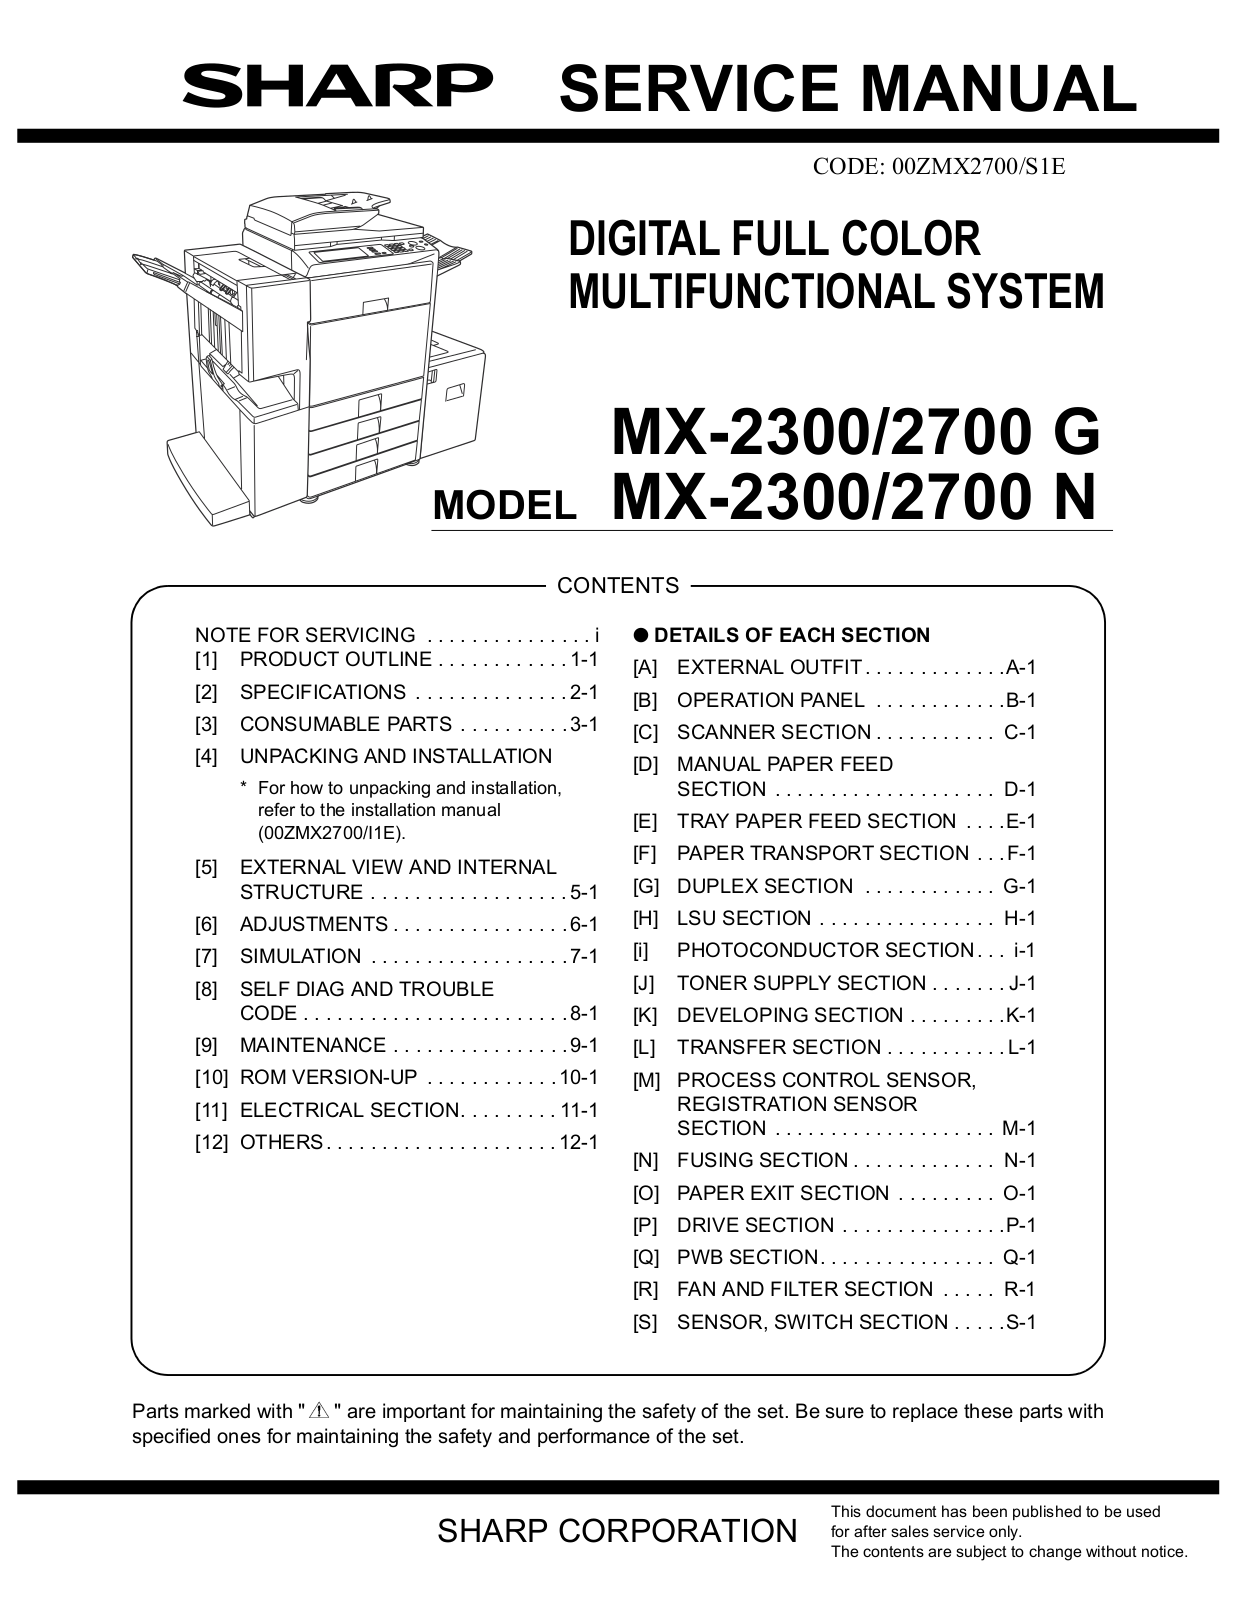 SHARP MX2700, MX-2300G, MX-2300N, MX-2700G, MX-2700N Service Manual